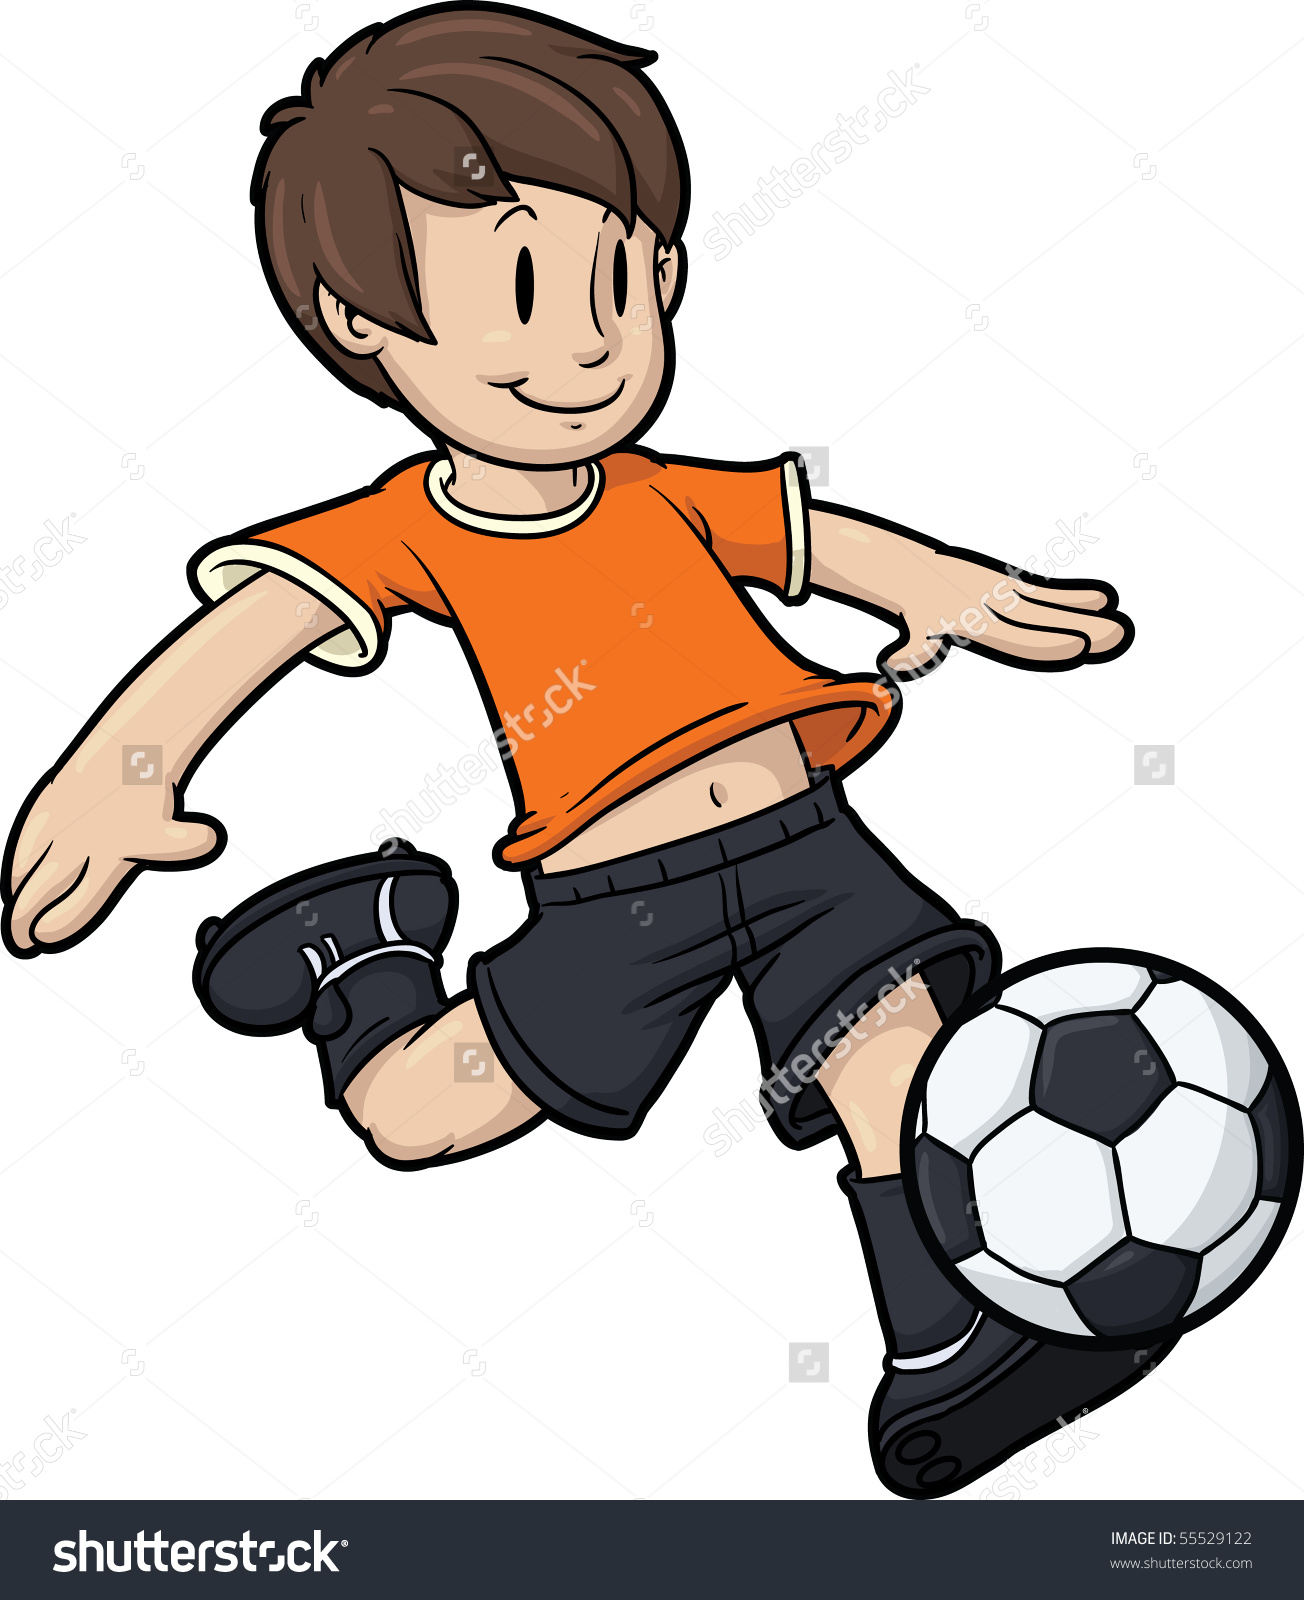 Cartoon Boy Playing Soccer Kid Soccer Stock Vector 55529122.